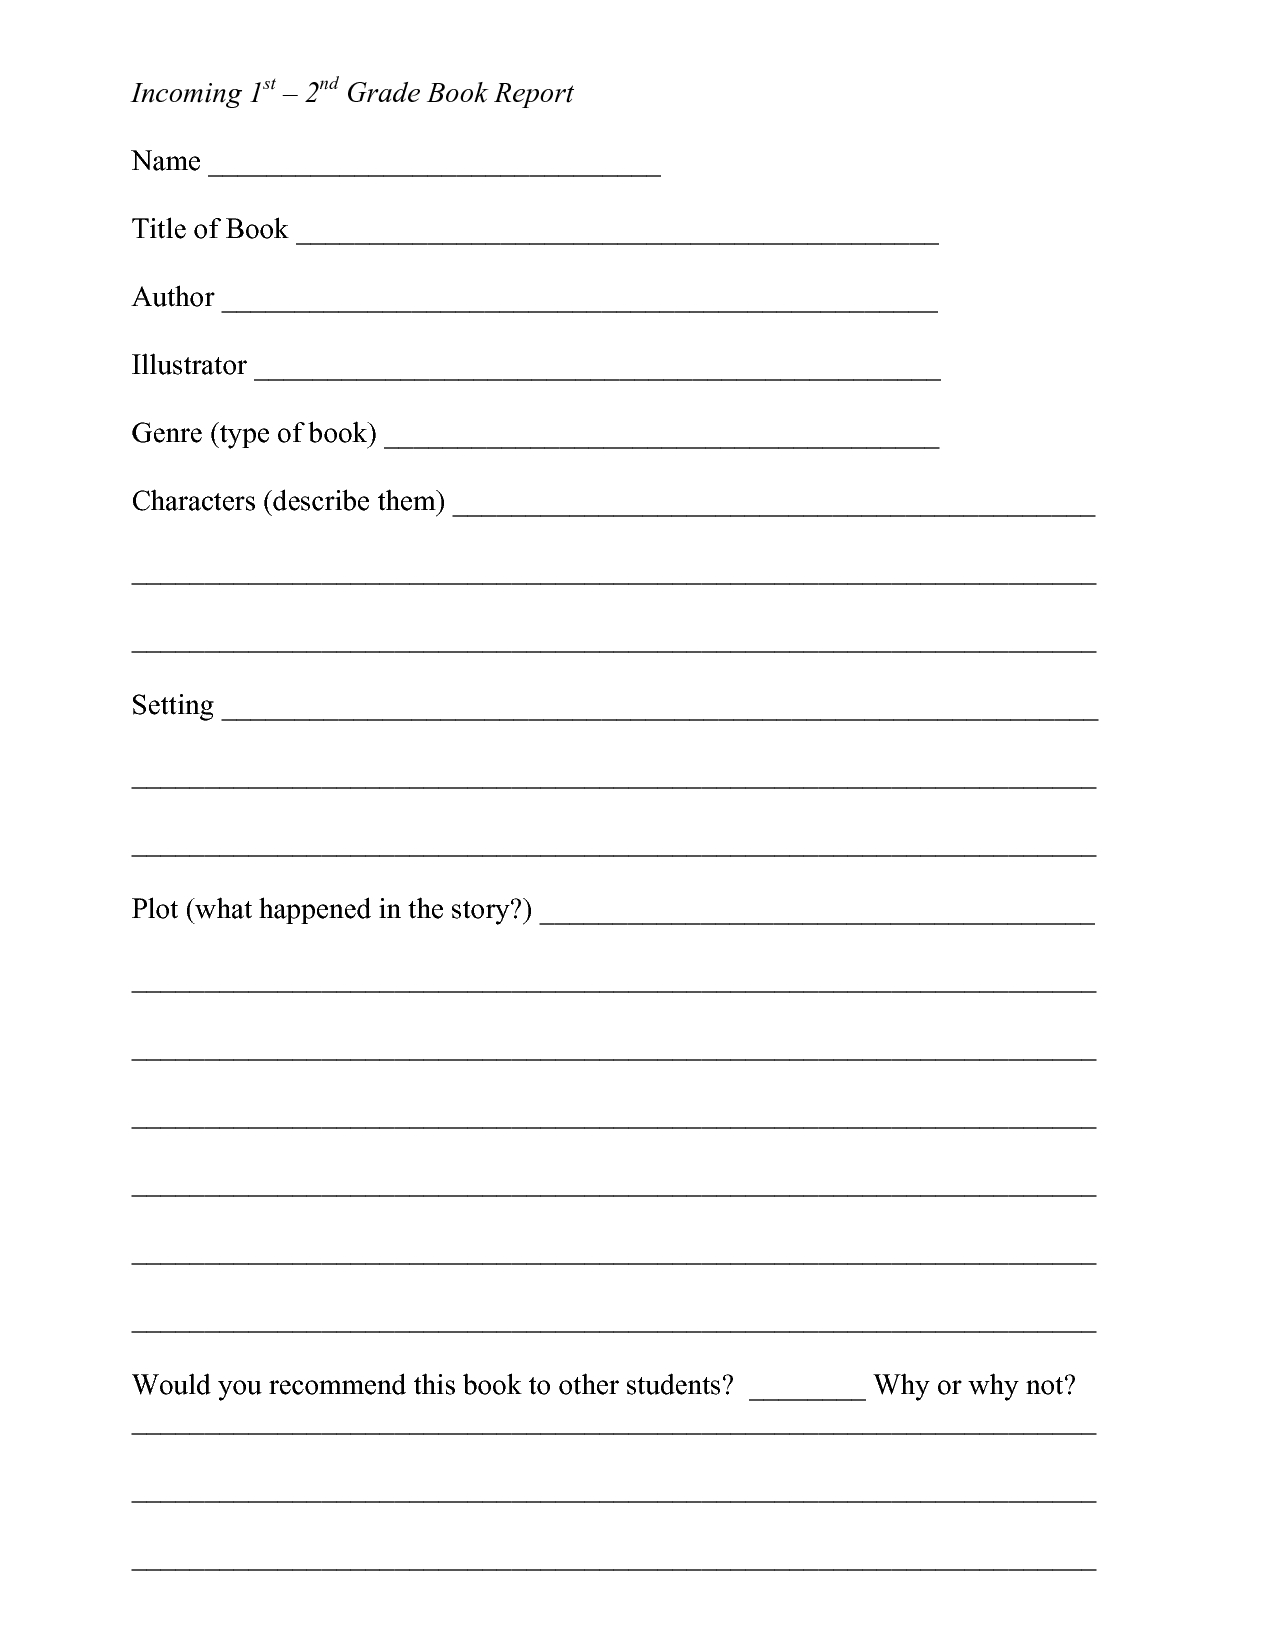 Book Report Template 2Nd Grade Free - Book Report Form Pertaining To Second Grade Book Report Template